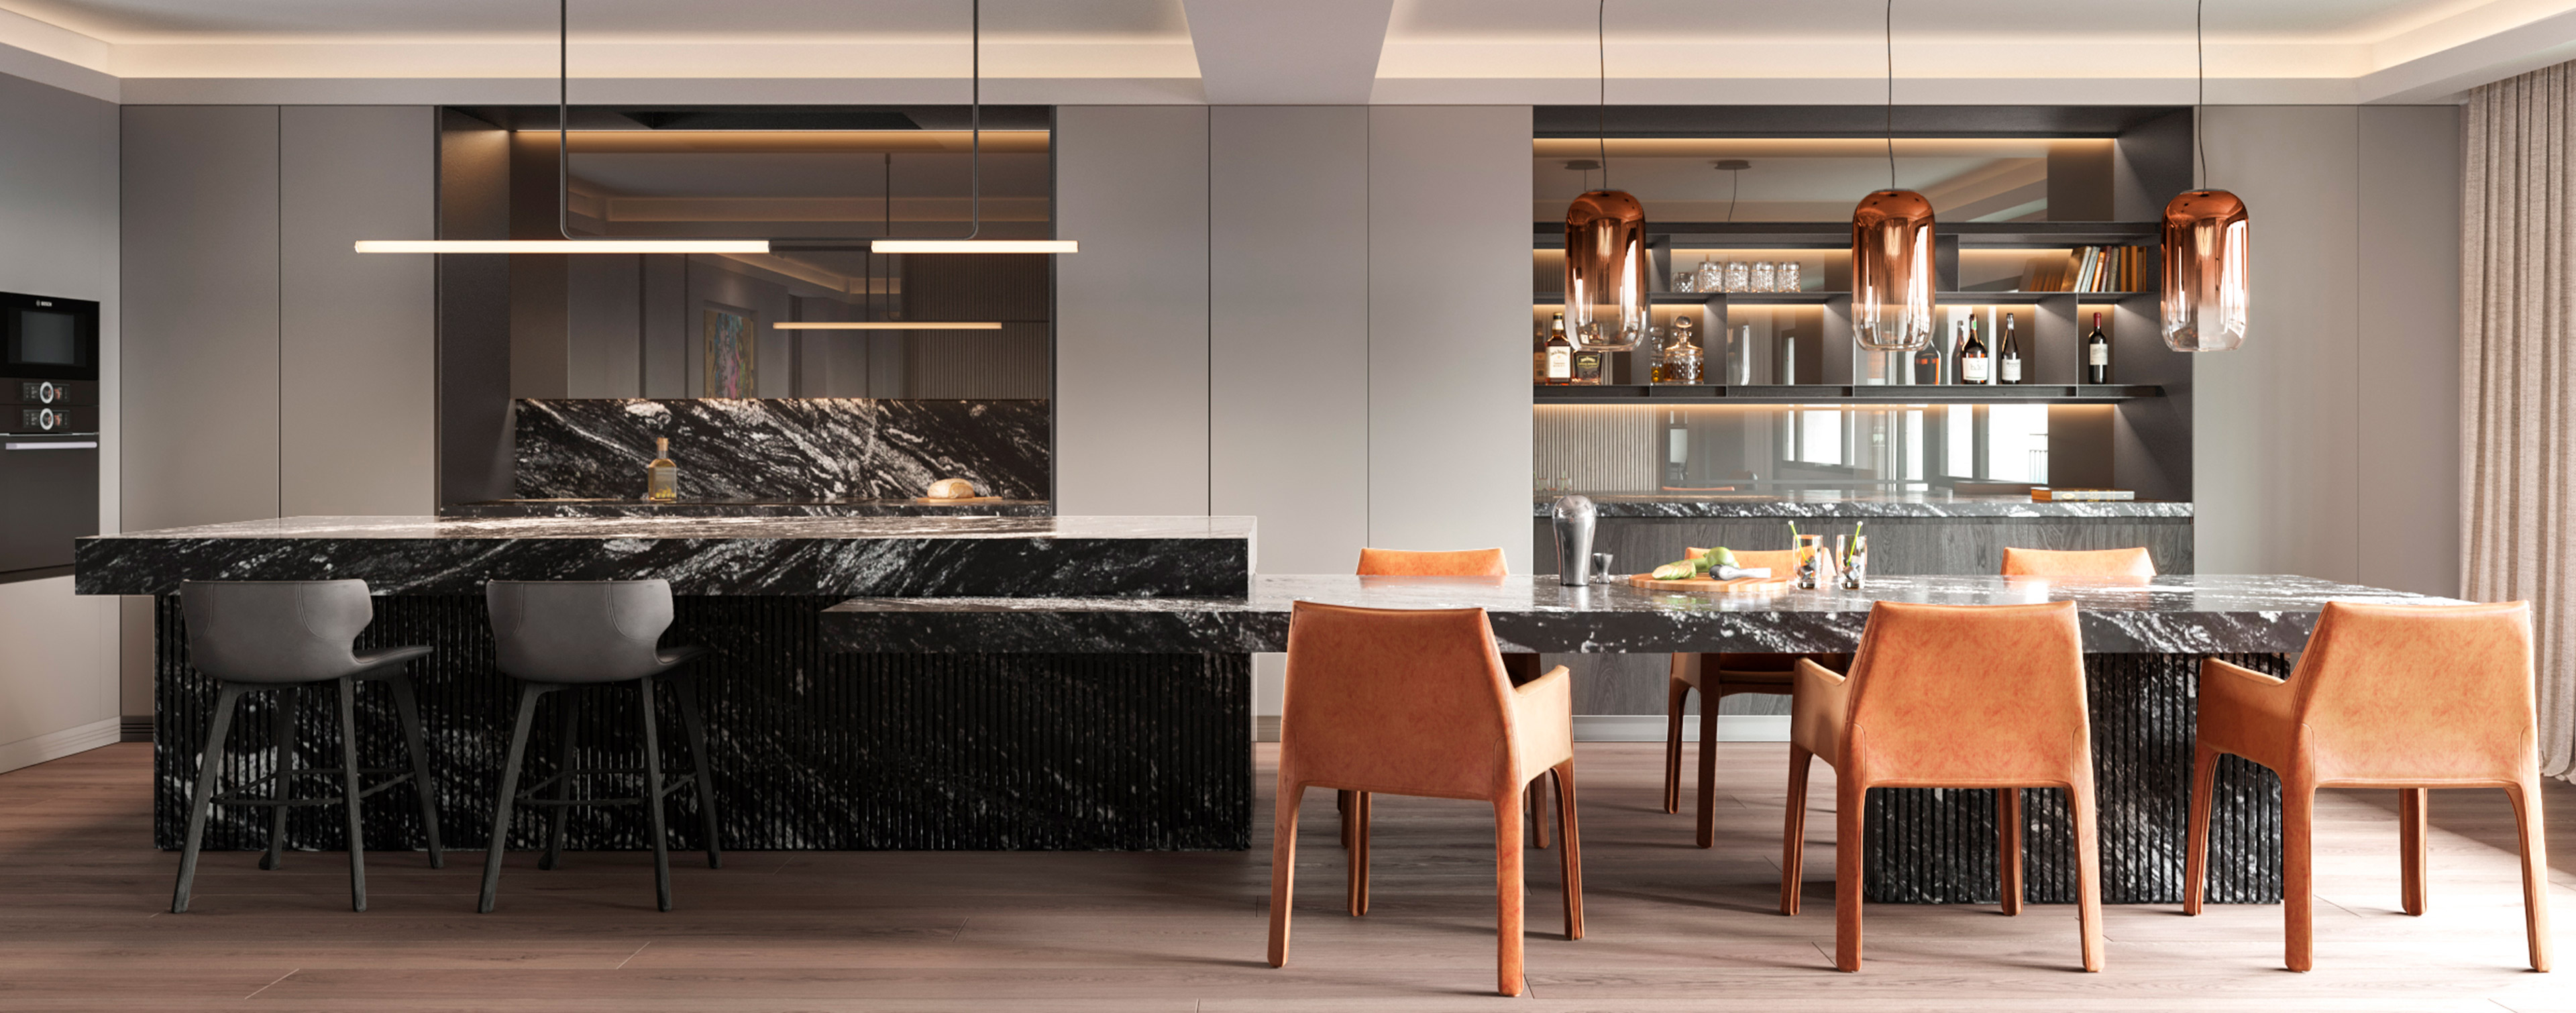 luv studio luxury architects madrid padilla apartment IMG 02 - LUV Studio - Architecture & Design - Barcelona